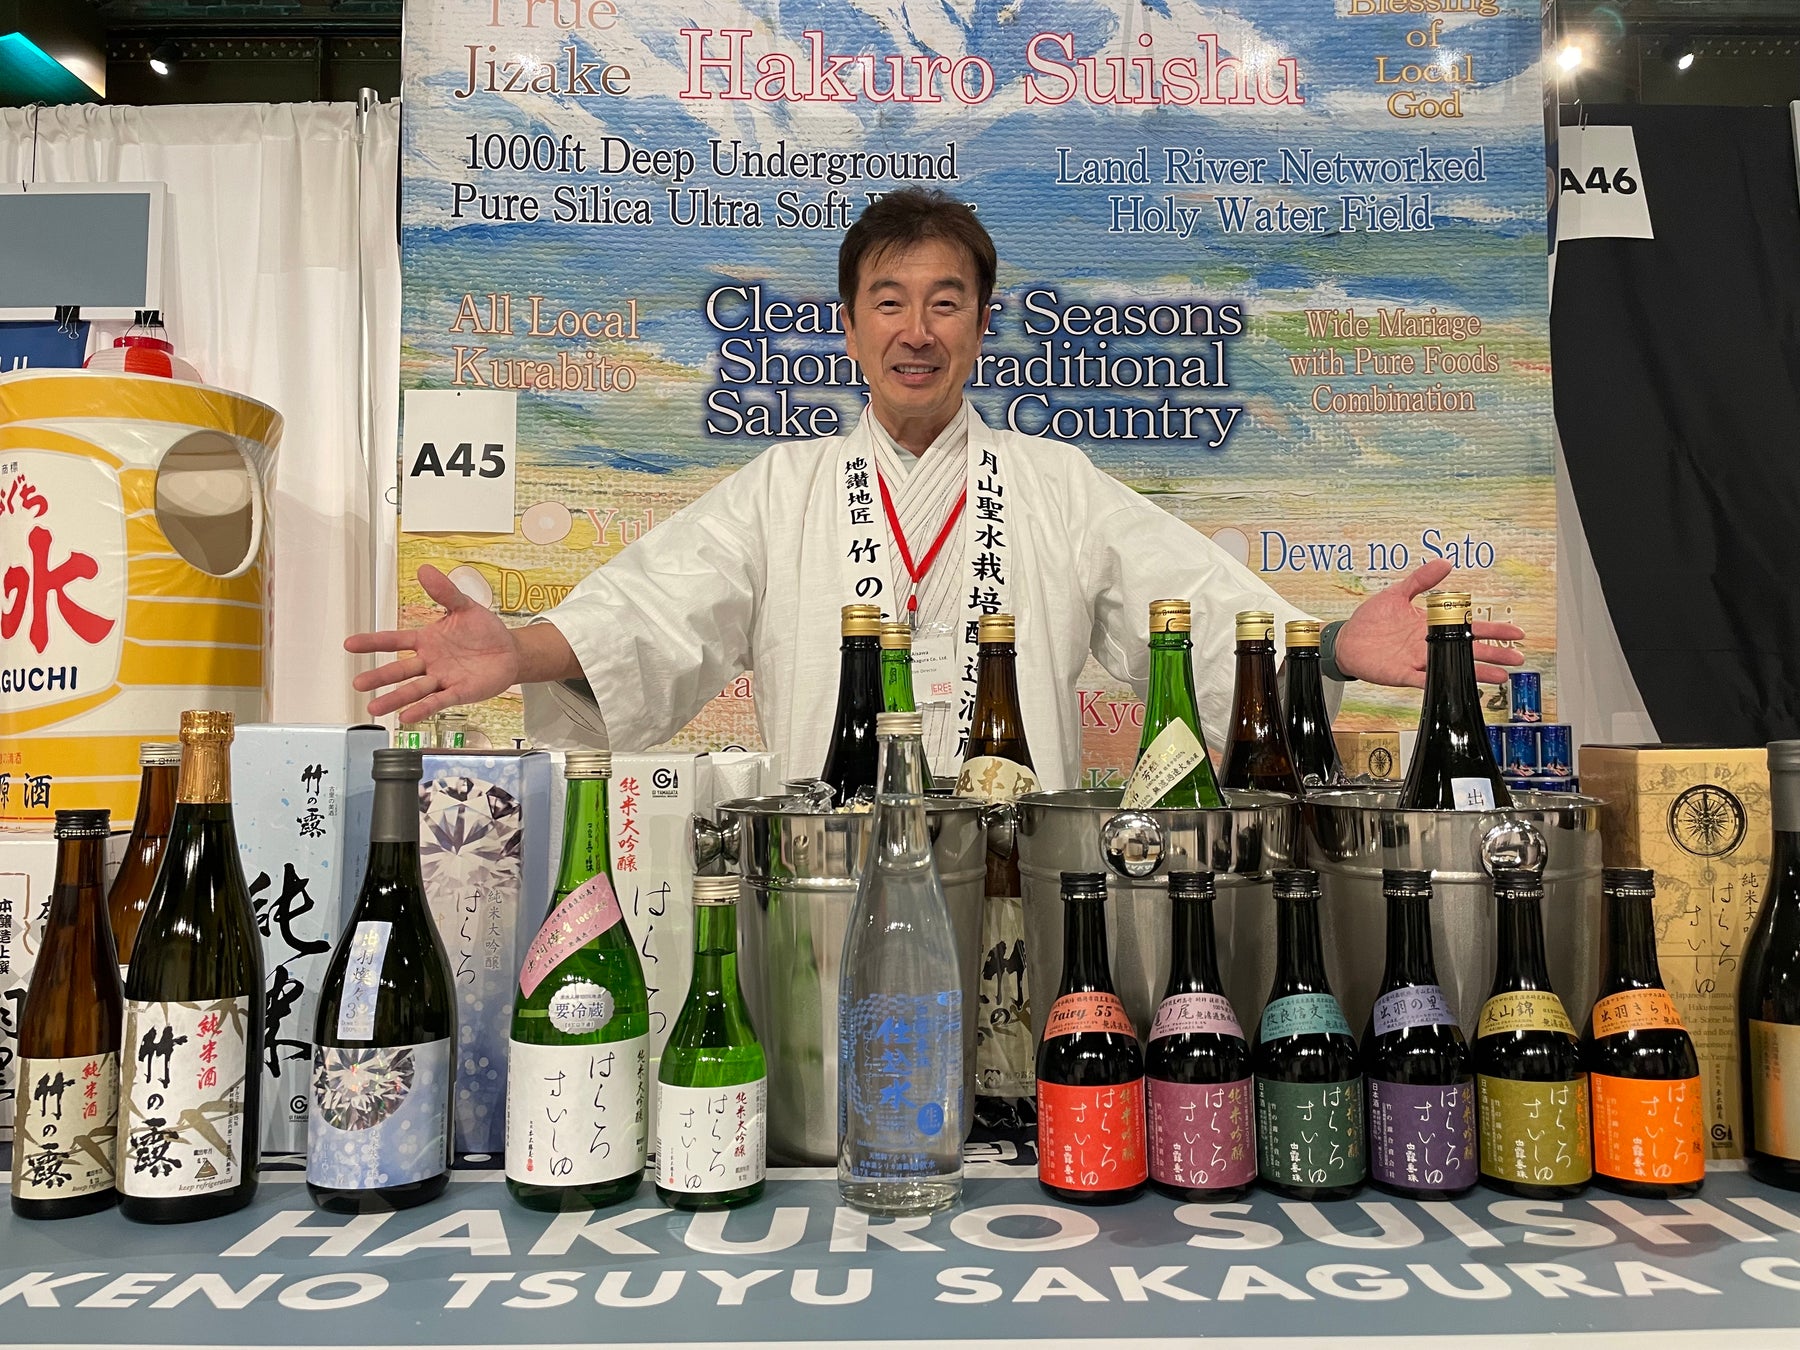 Sake Brewers – 5 Quick Questions for Masao Aisawa from Take no Tsuyu Sake Brewery